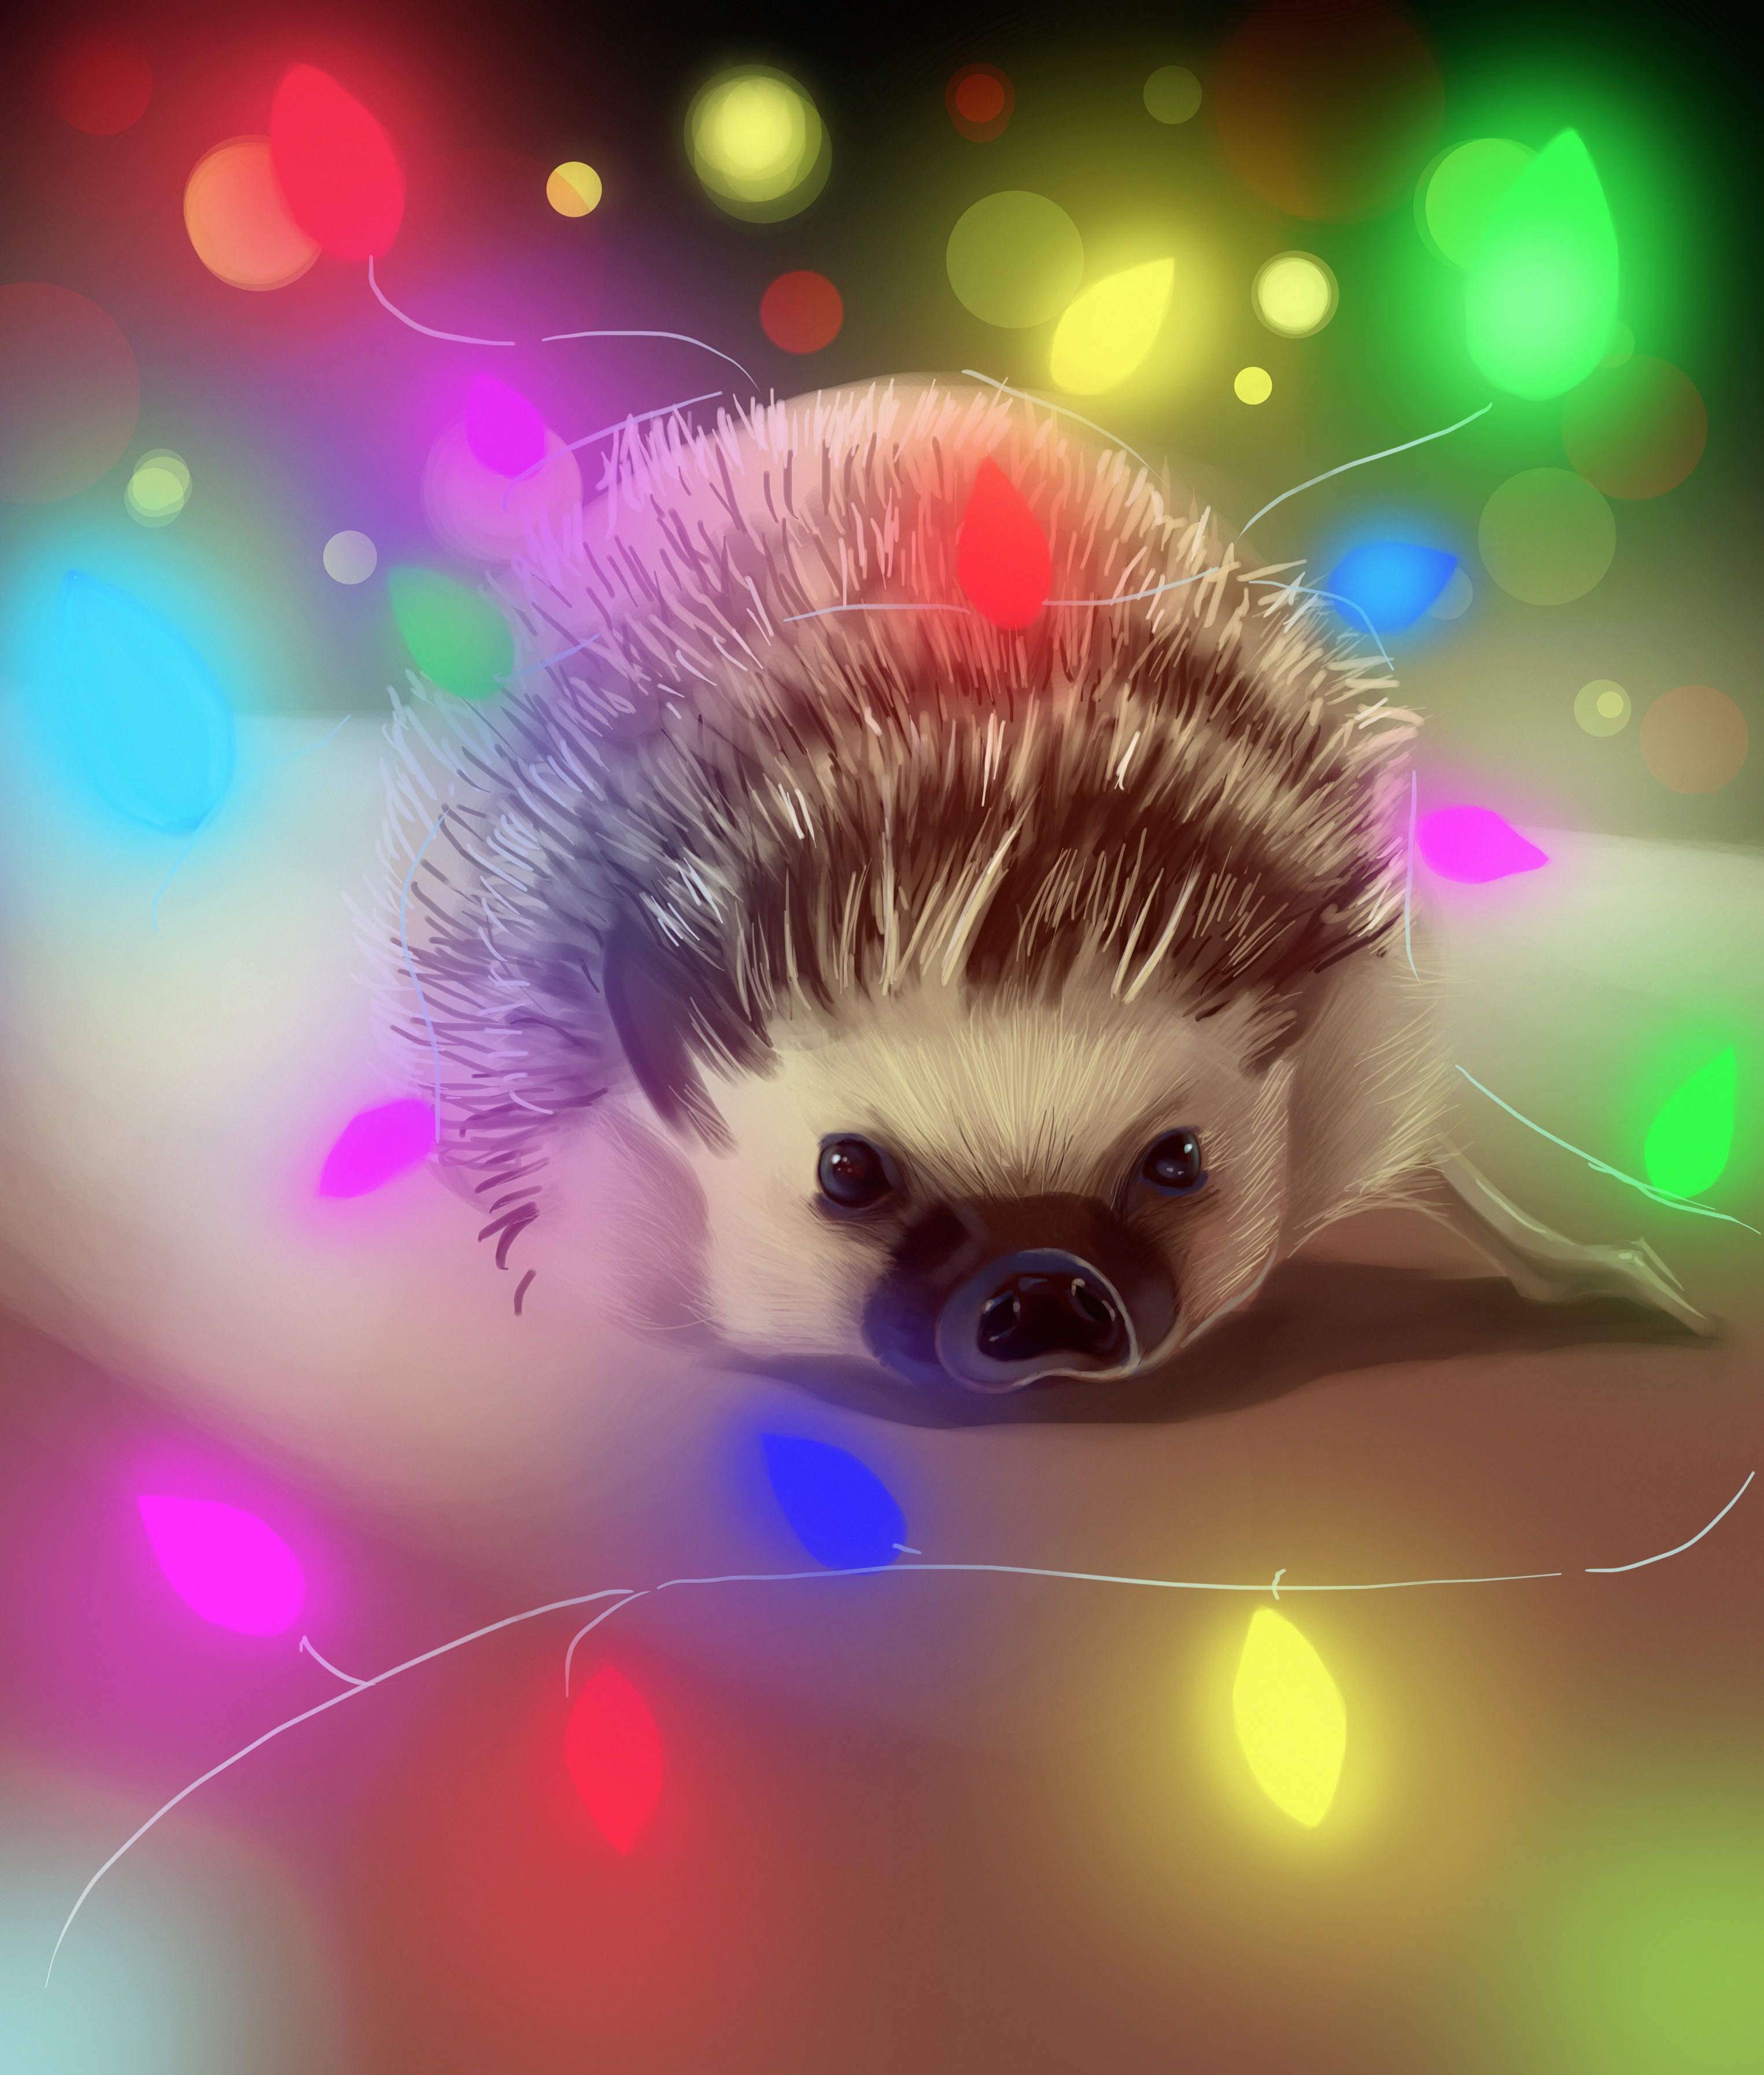 Wallpaper Hedgehog, autumn 1920x1200 HD Picture, Image